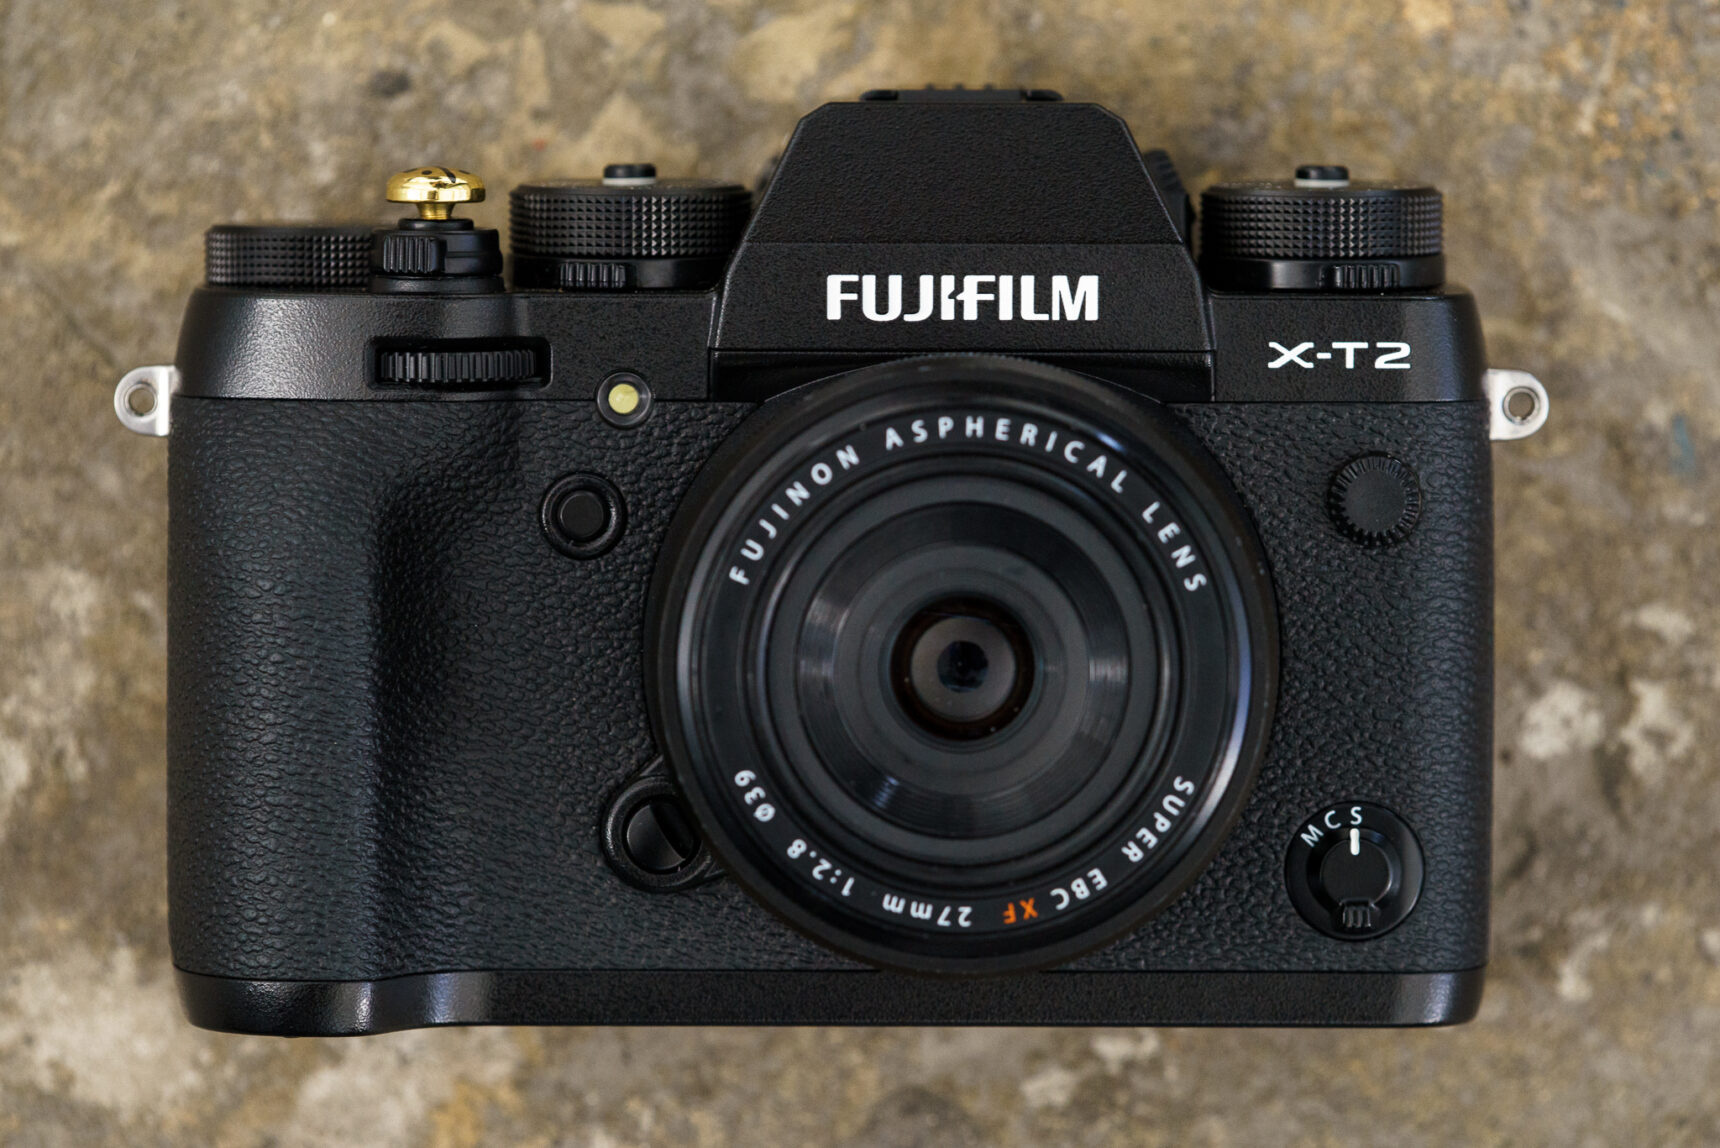 Fuji XT2 Street Photography Review - Camera Front